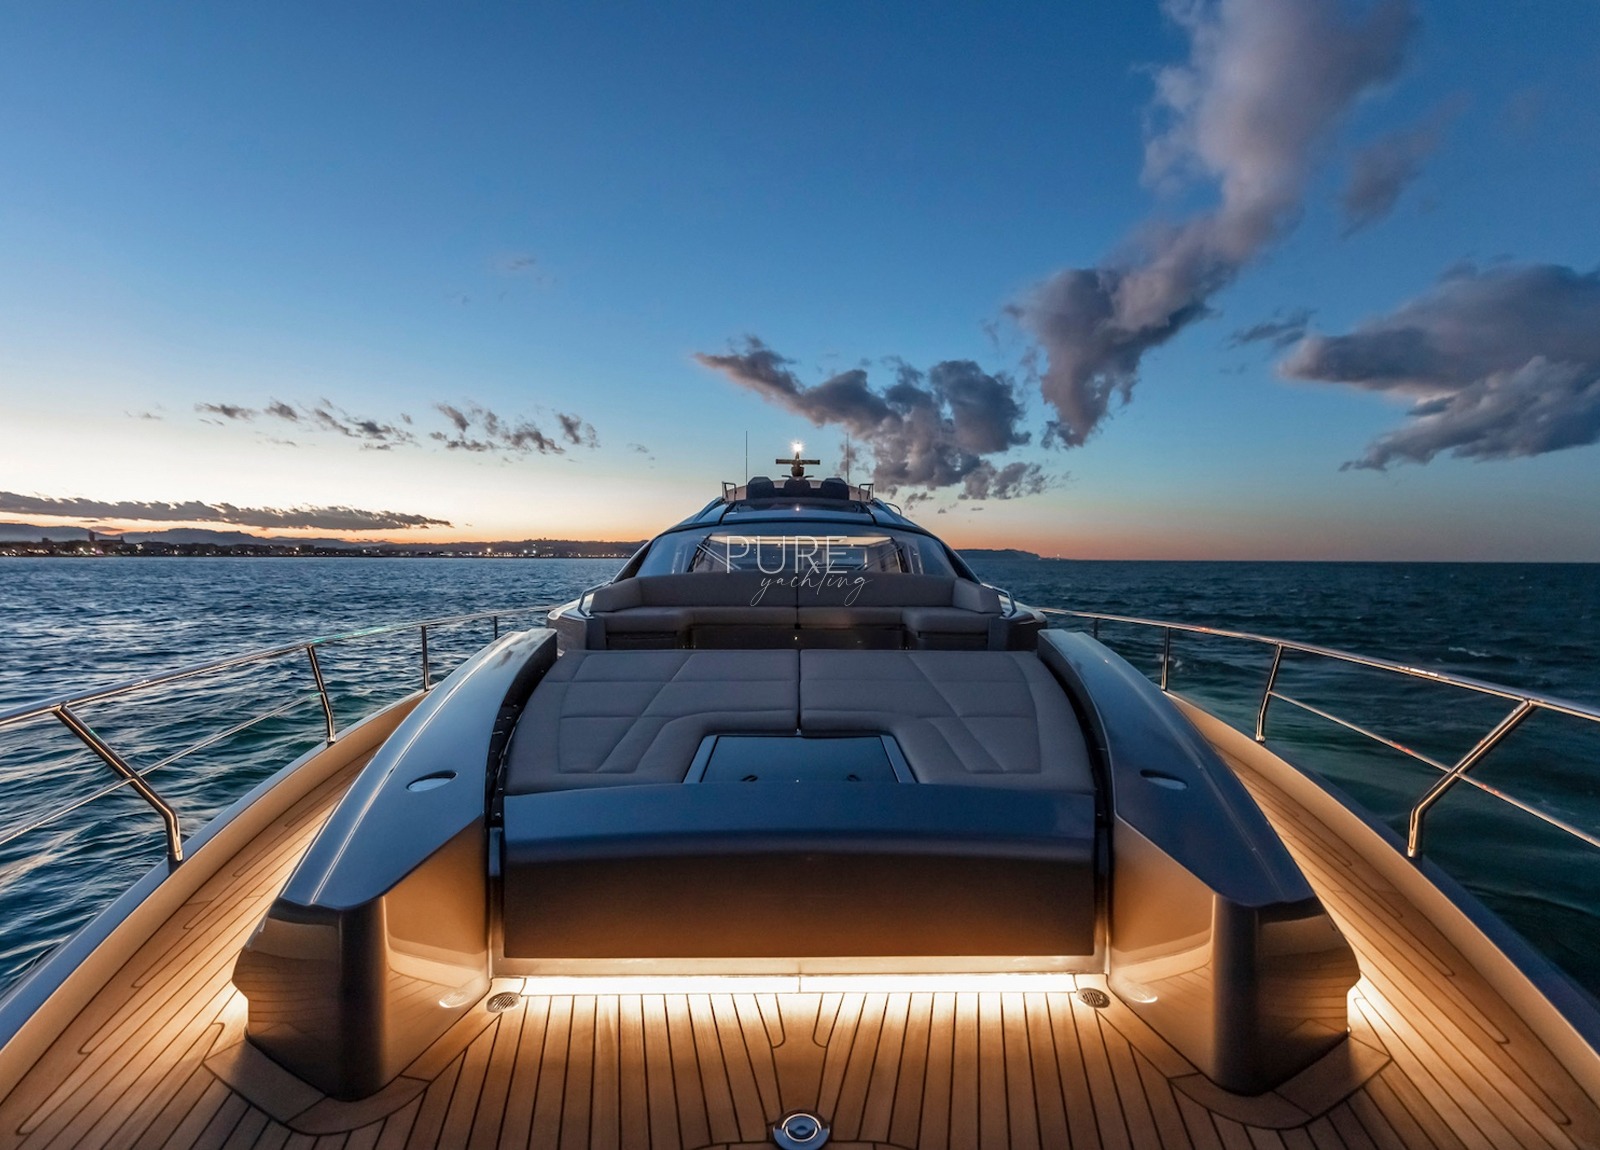 oberdeck luxusyacht pershing 8x beyond balearic islands